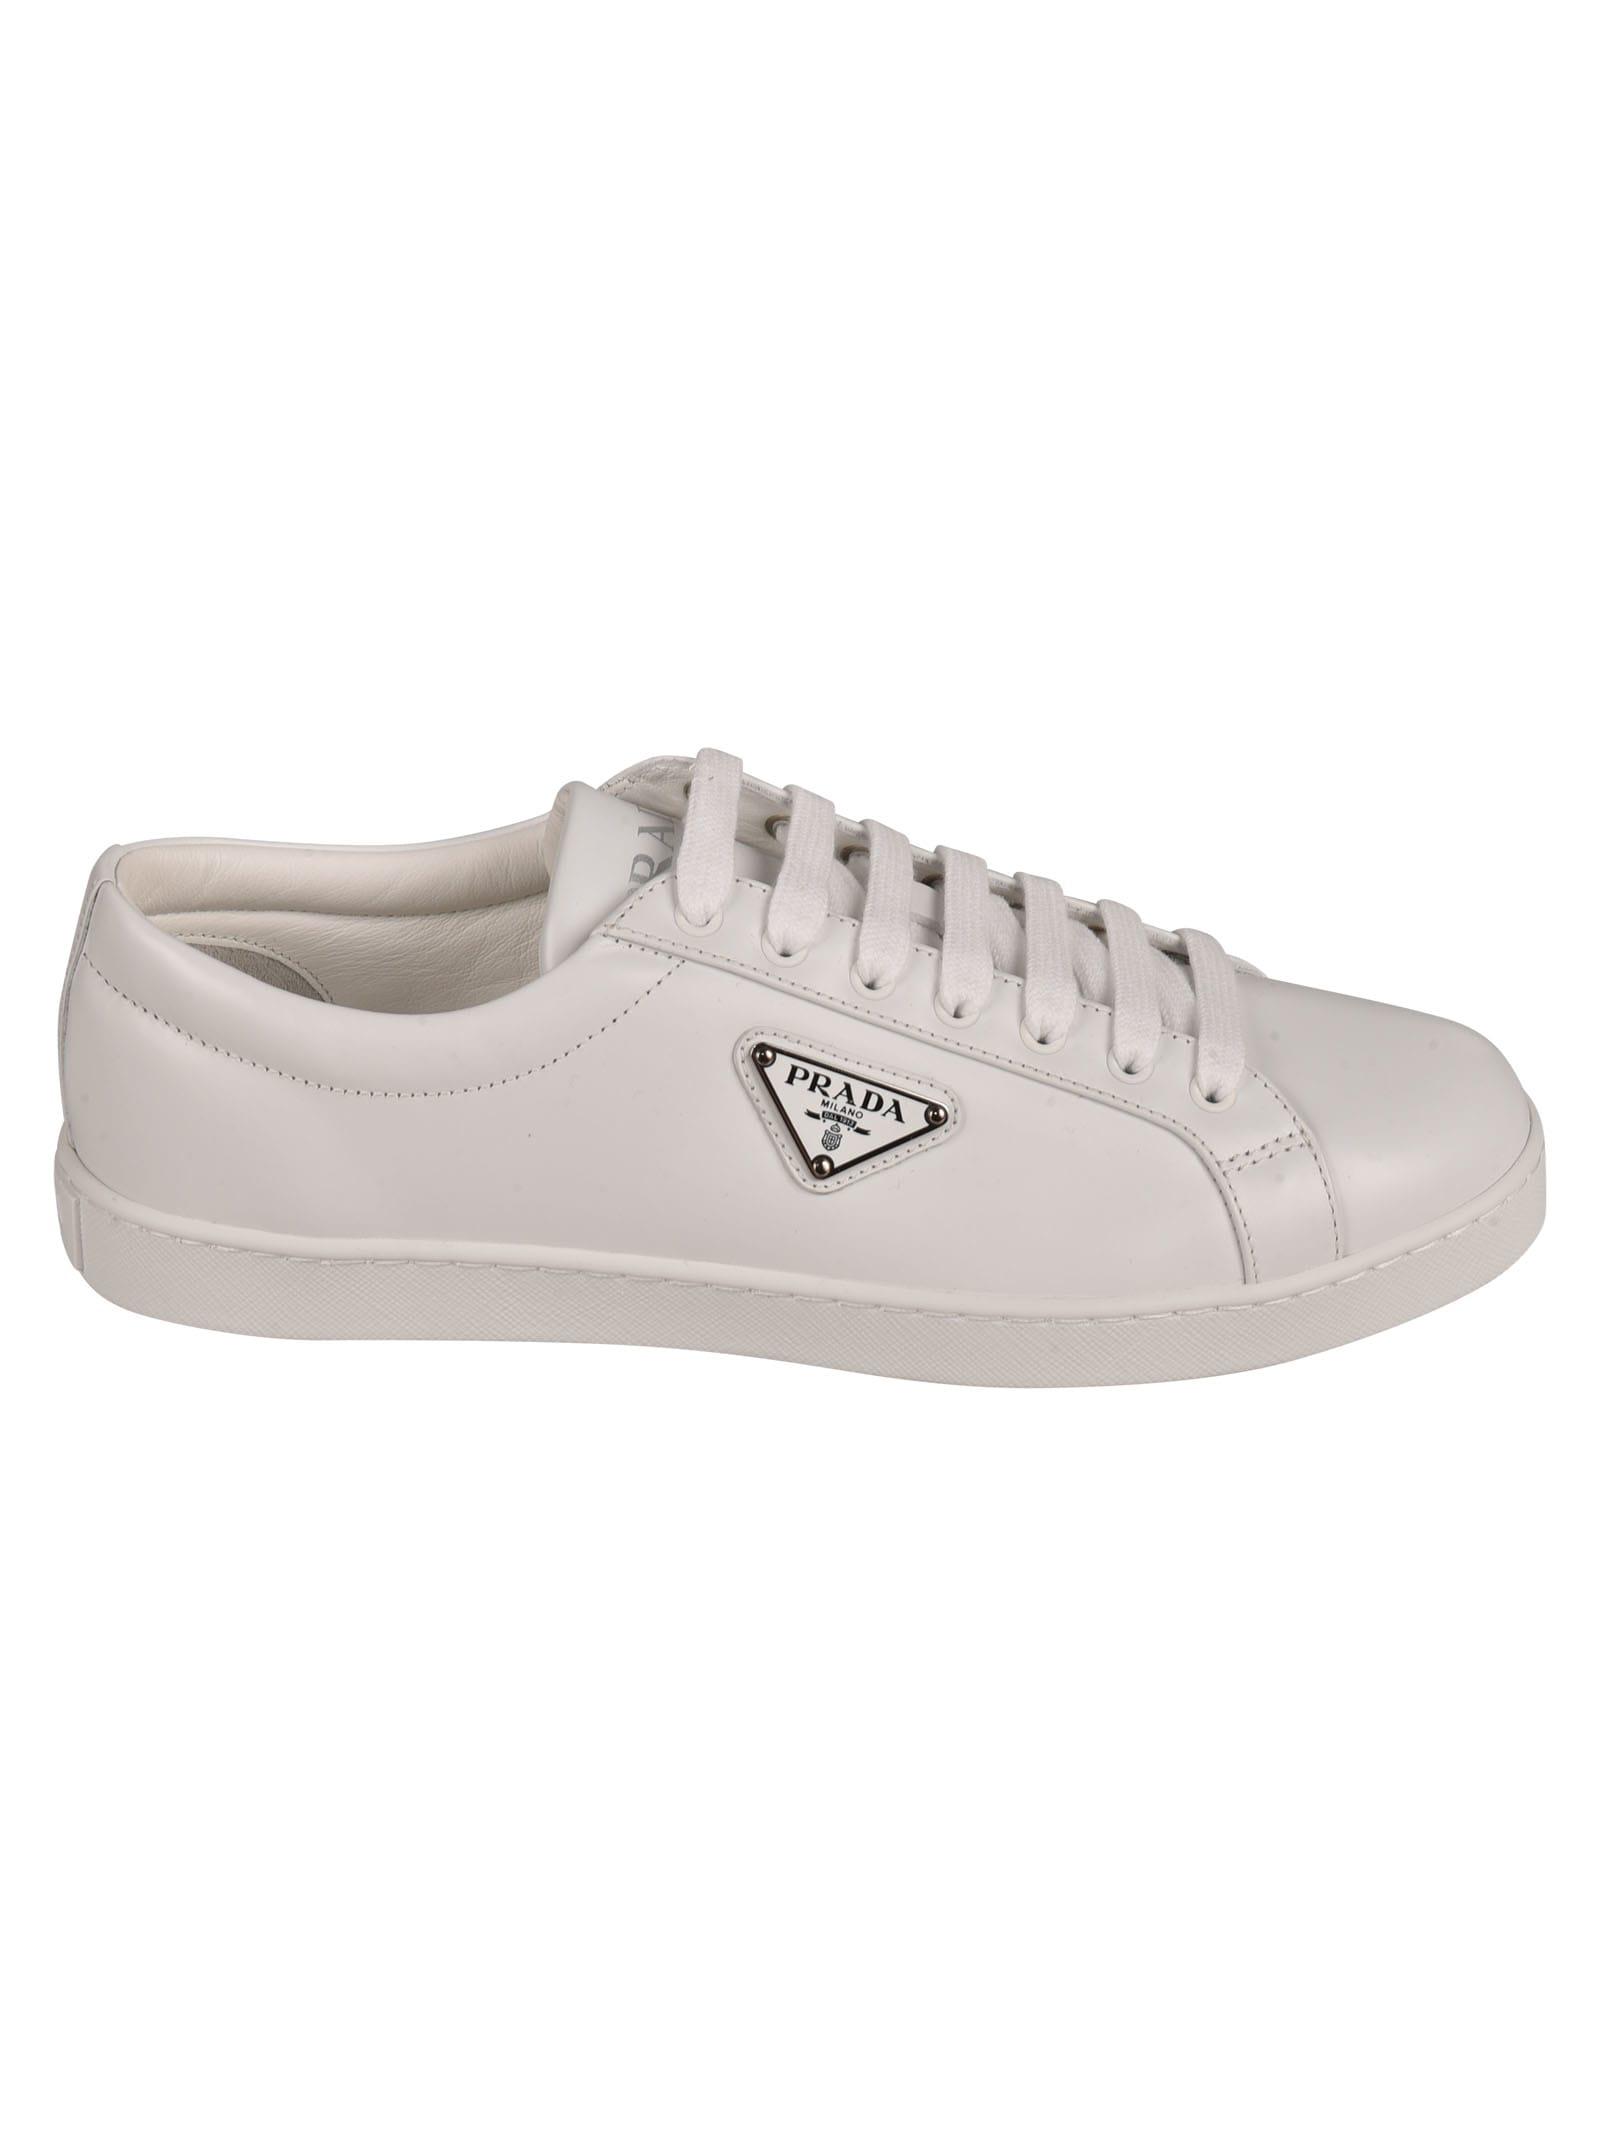 Prada Lane Sneakers in White for Men | Lyst